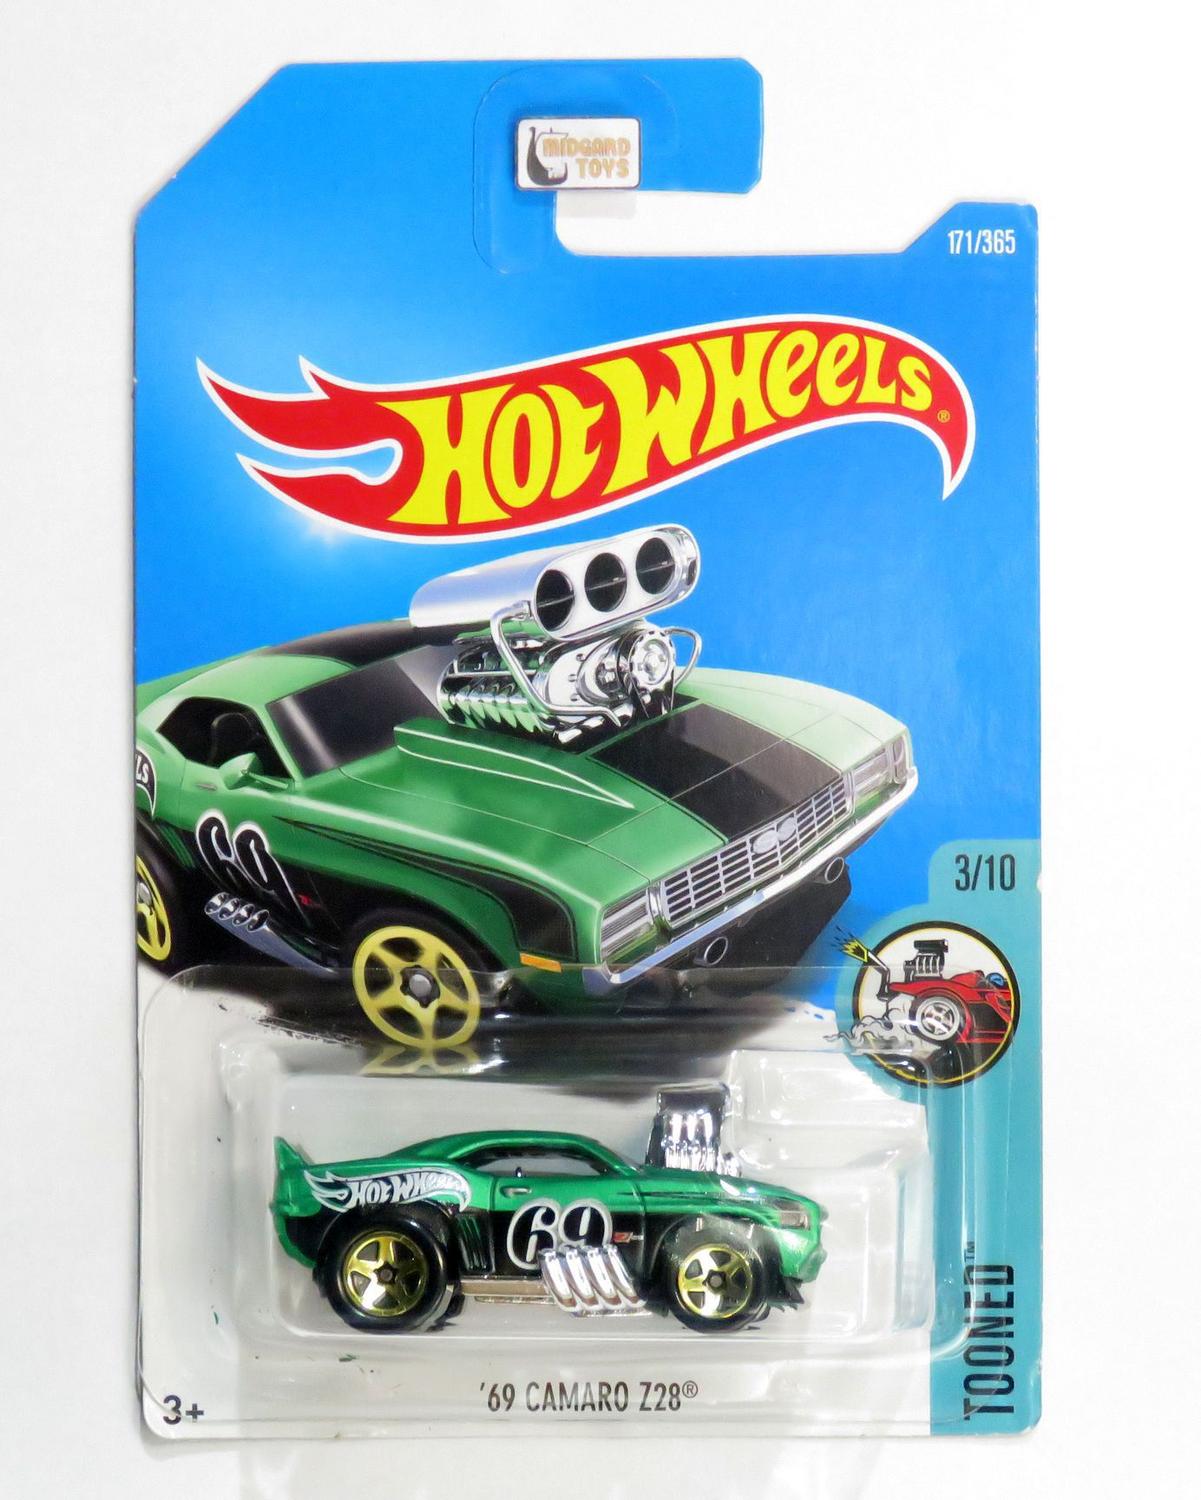 Hot Wheels 2017 #171/365 1969 chevy CAMARO Z28 green Tooned 